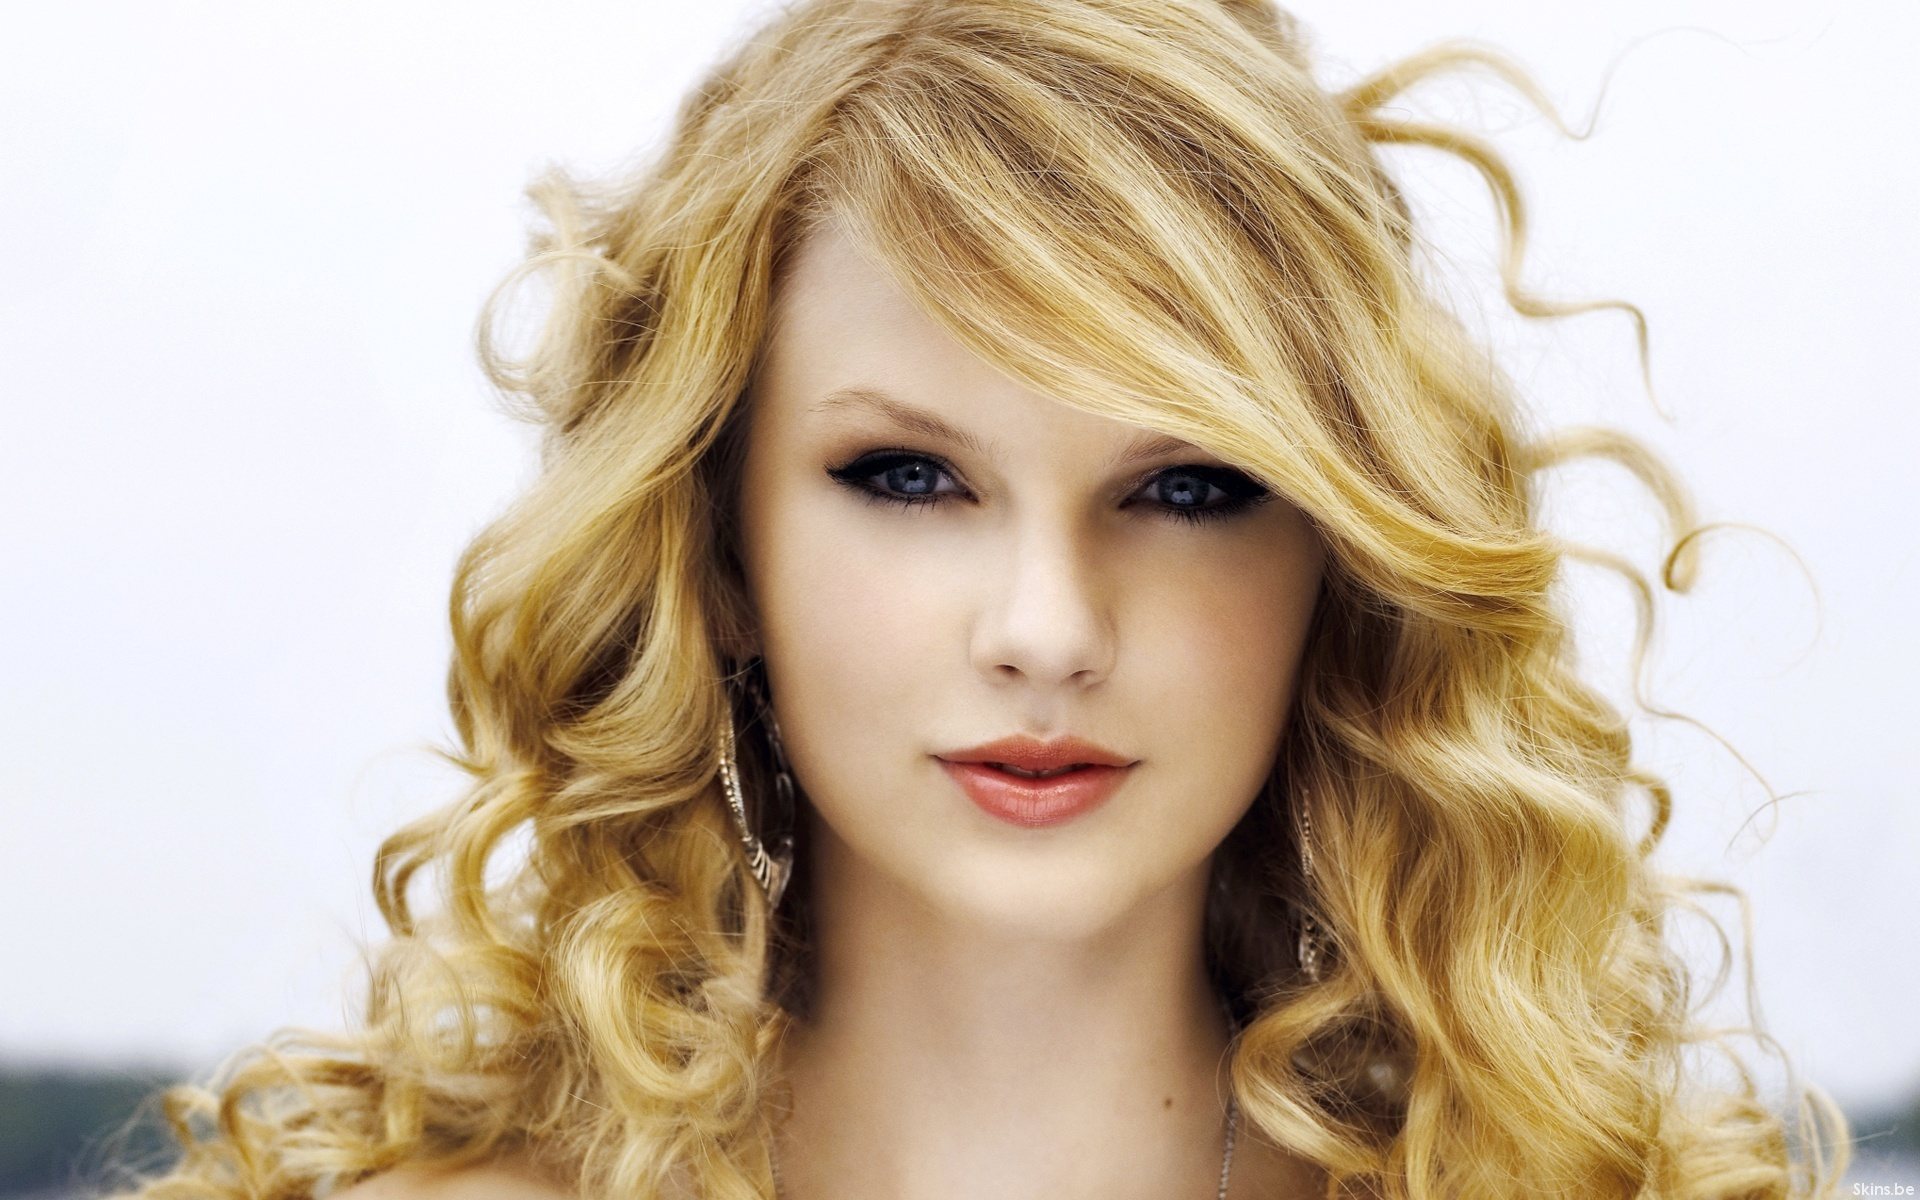 "Blonde" by Taylor Swift - wide 6